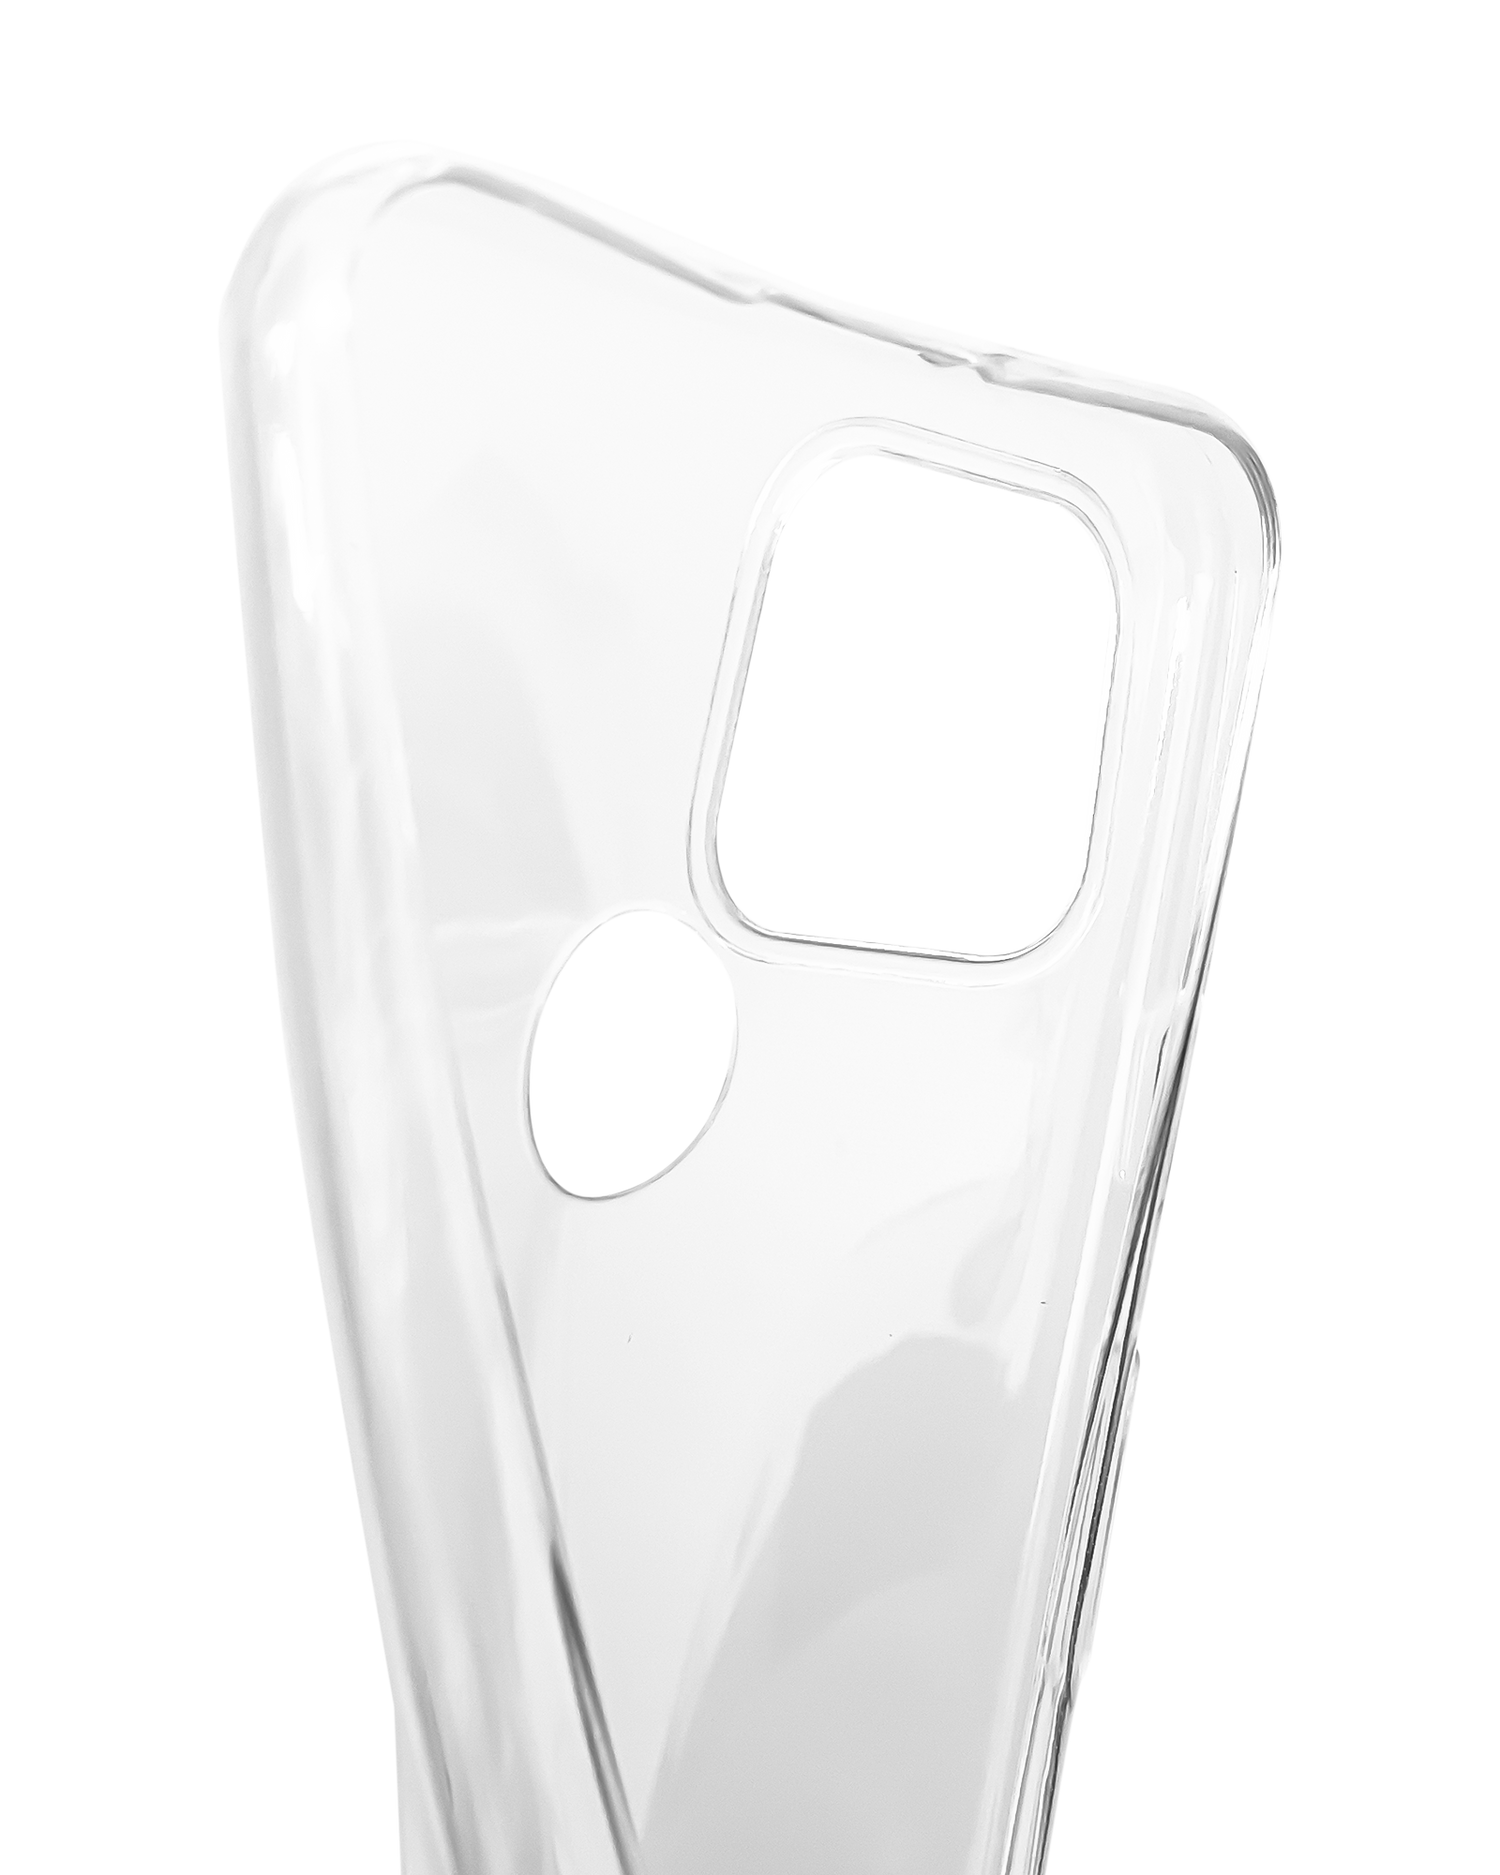 Silicone Phone Case Google Pixel 5: Very flexible